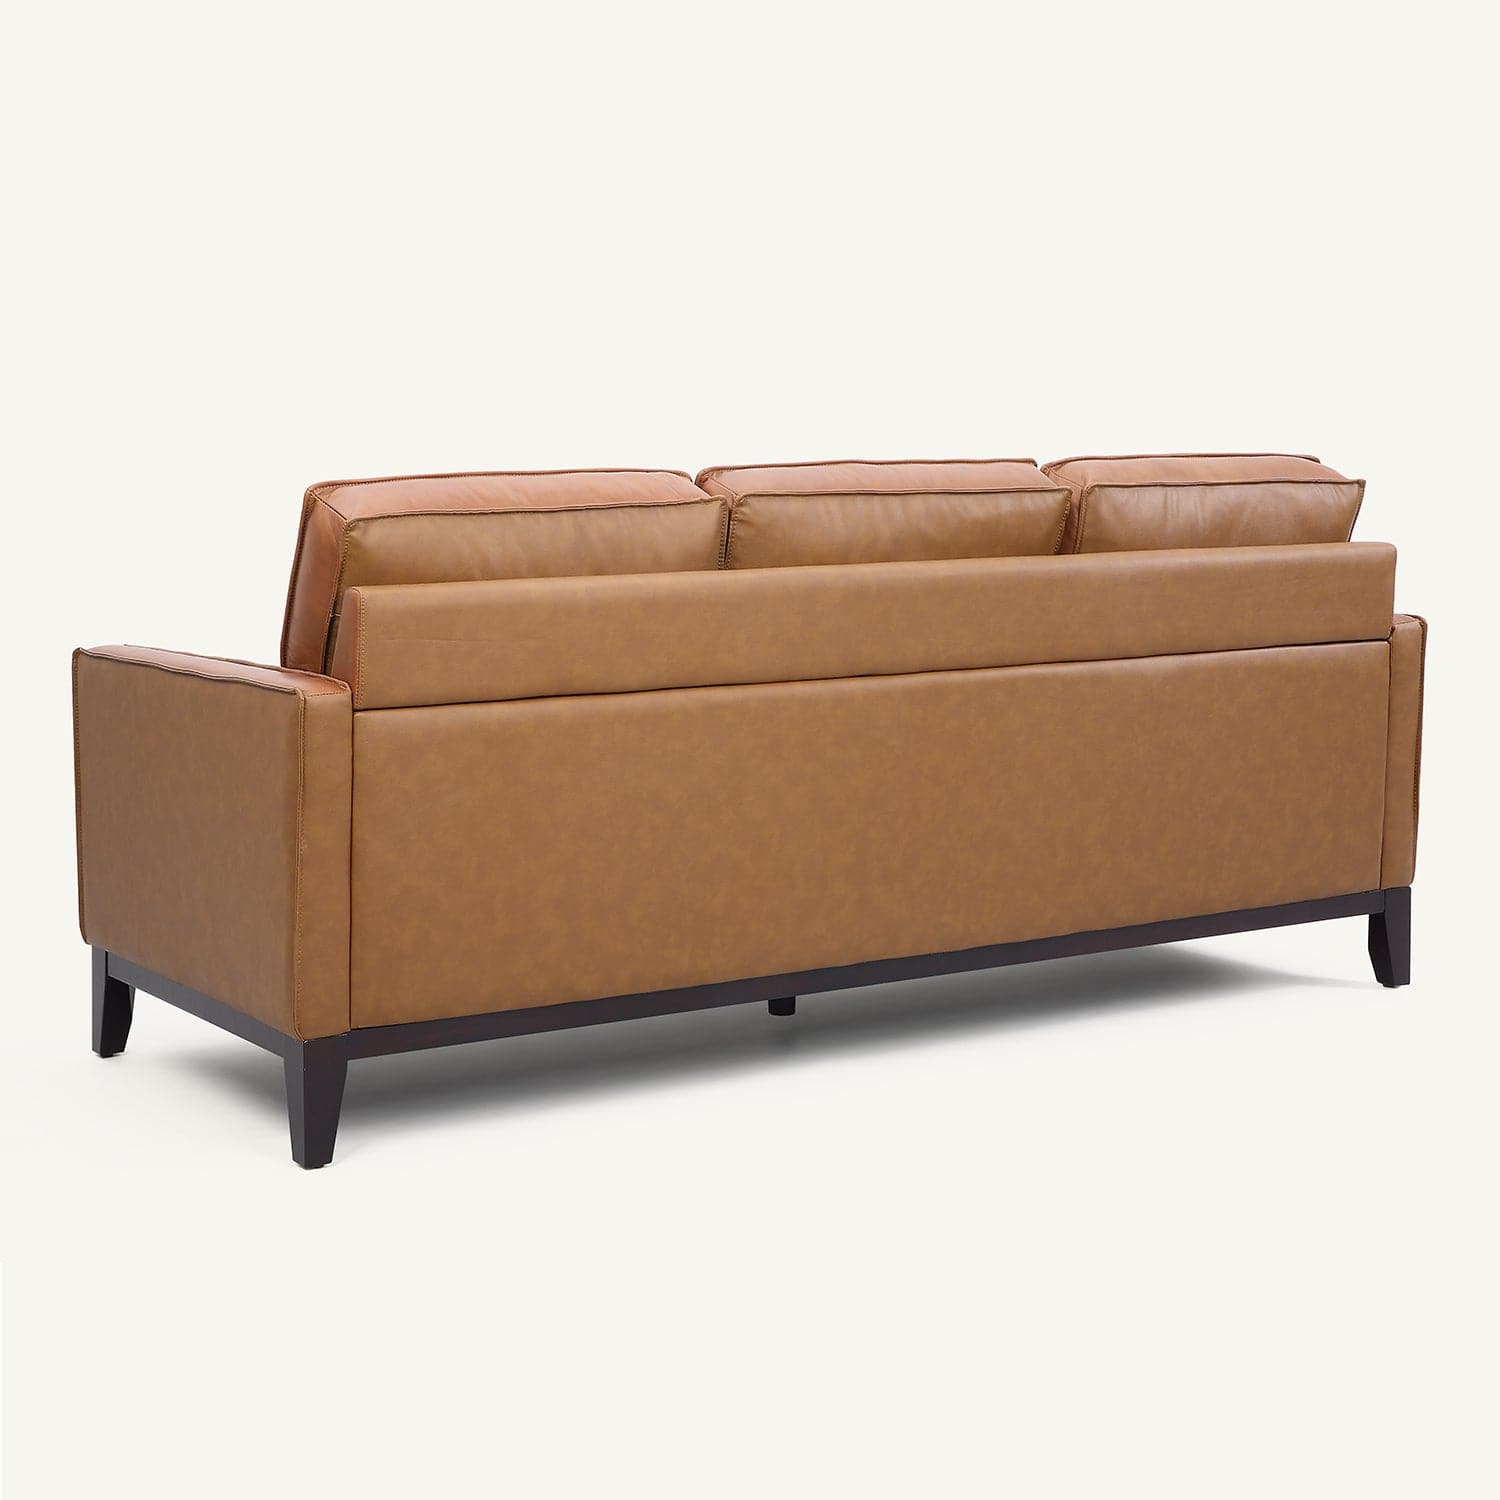 Pimlico Camel Brown Top Grain Leather 3-Seater Sofa